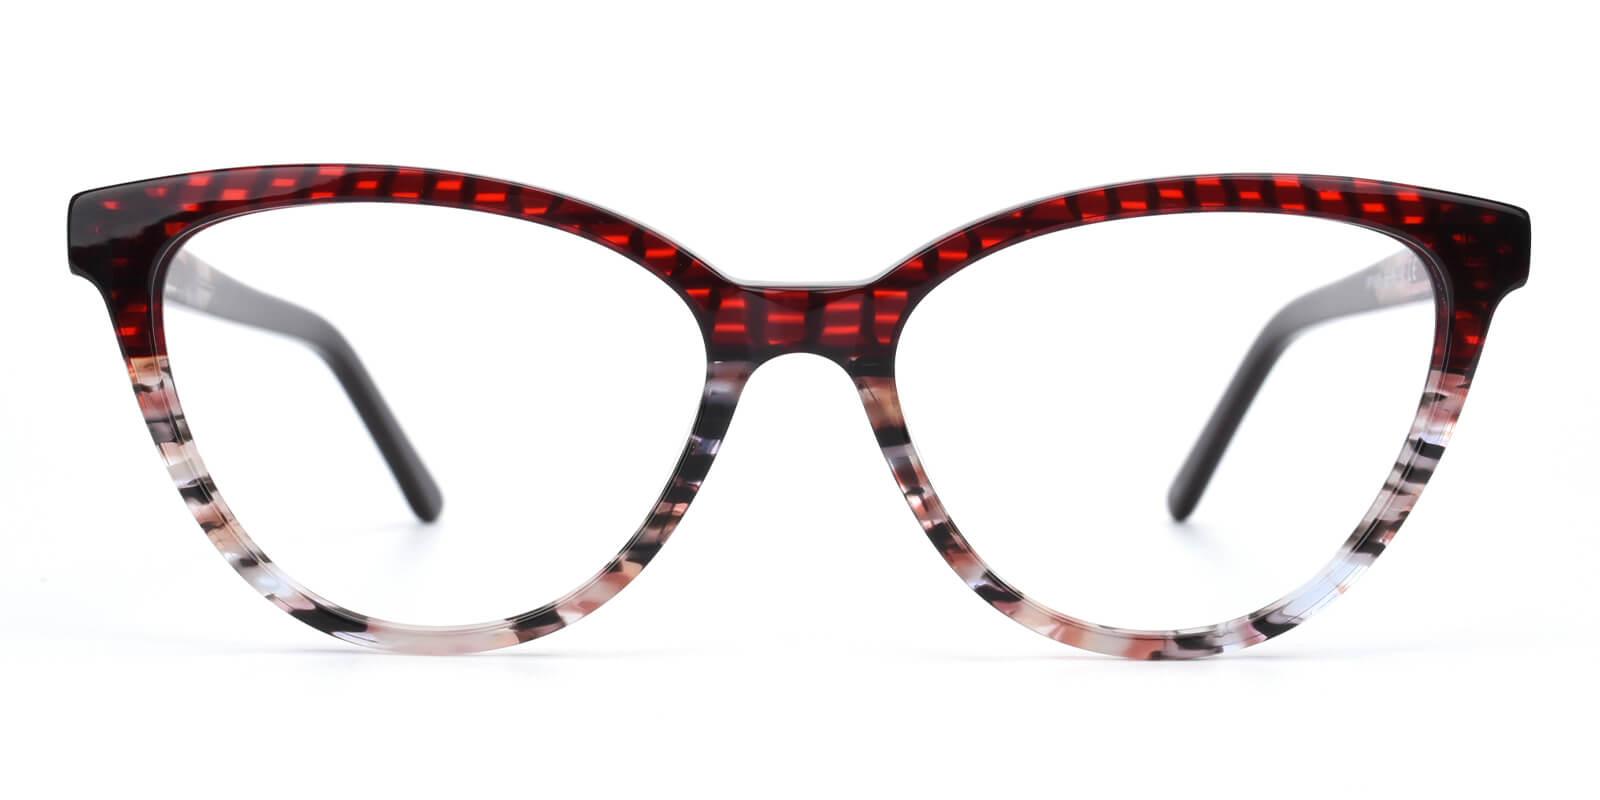 Daphnely-Red-Cat-Acetate-Eyeglasses-detail